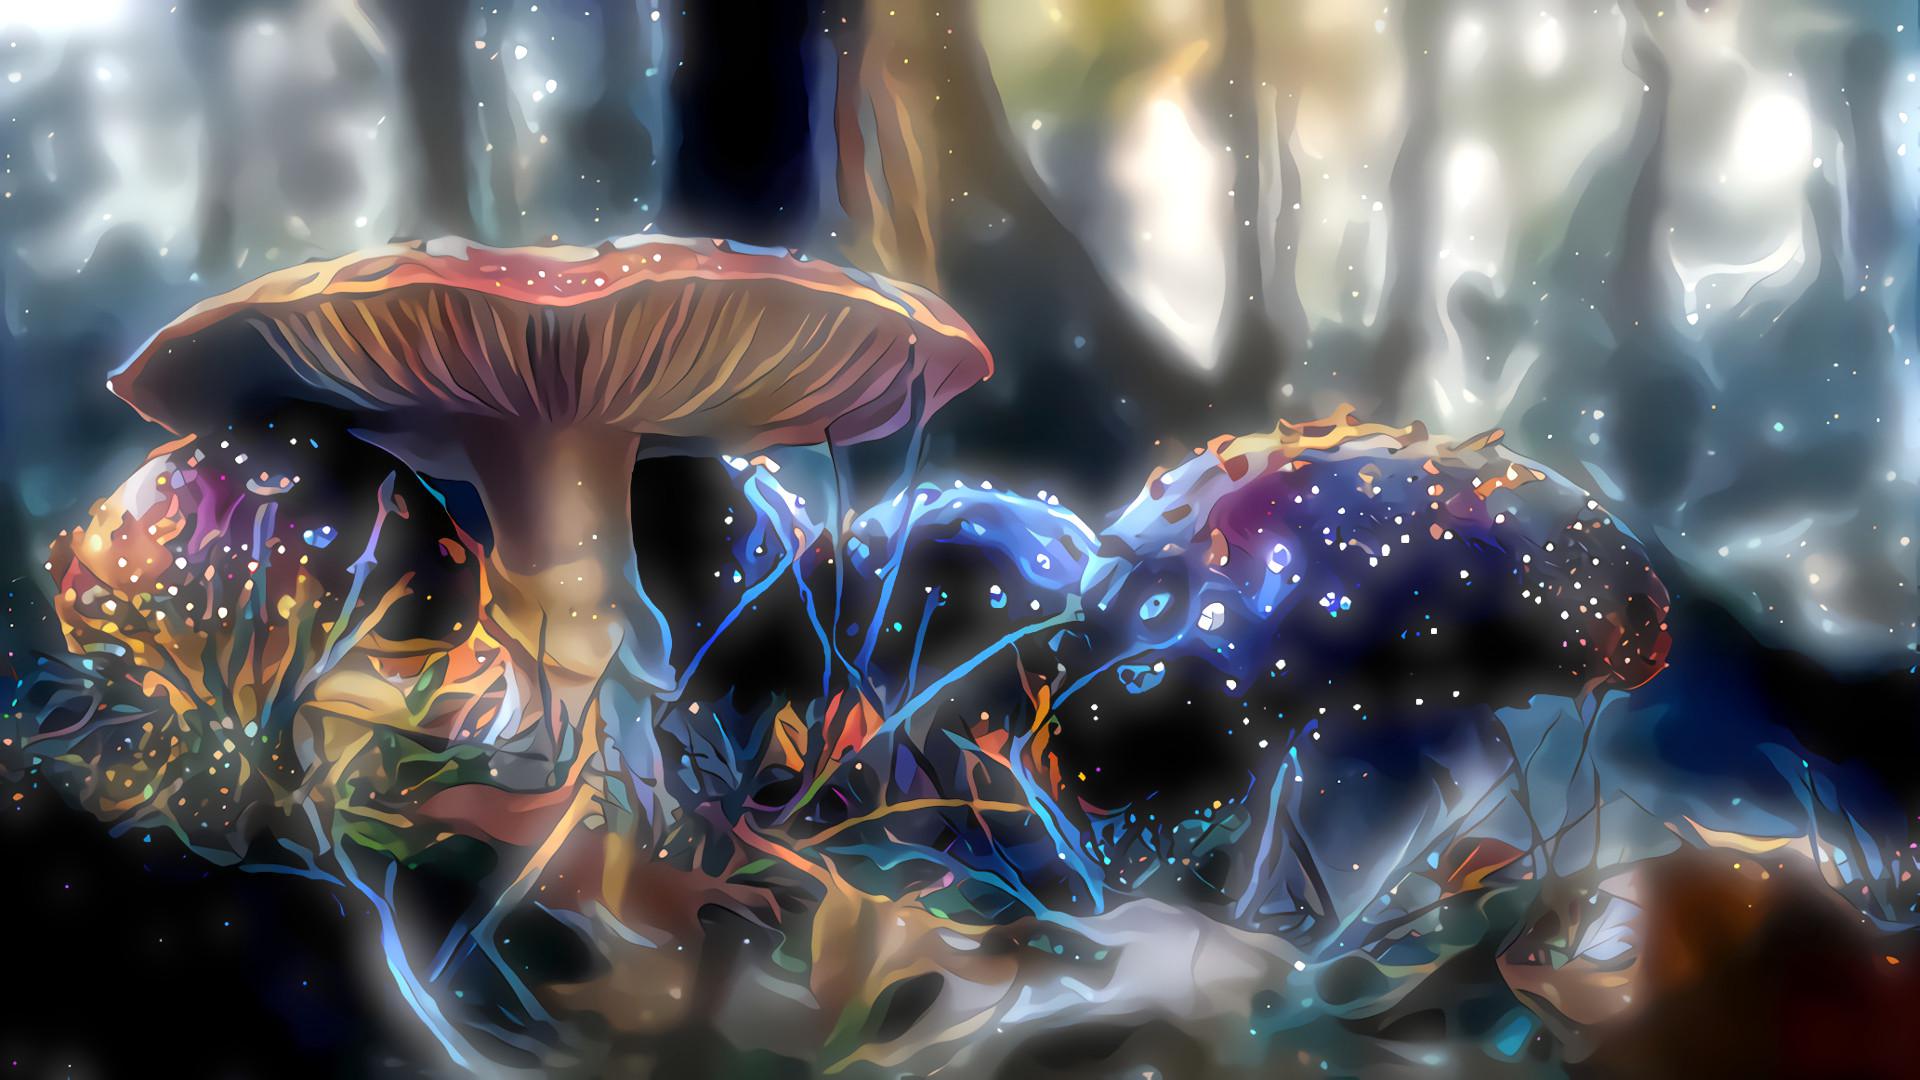 Mushrooms in the forest wallpaper - Digital Art wallpapers - #32969 - Mushroom, Goblincore